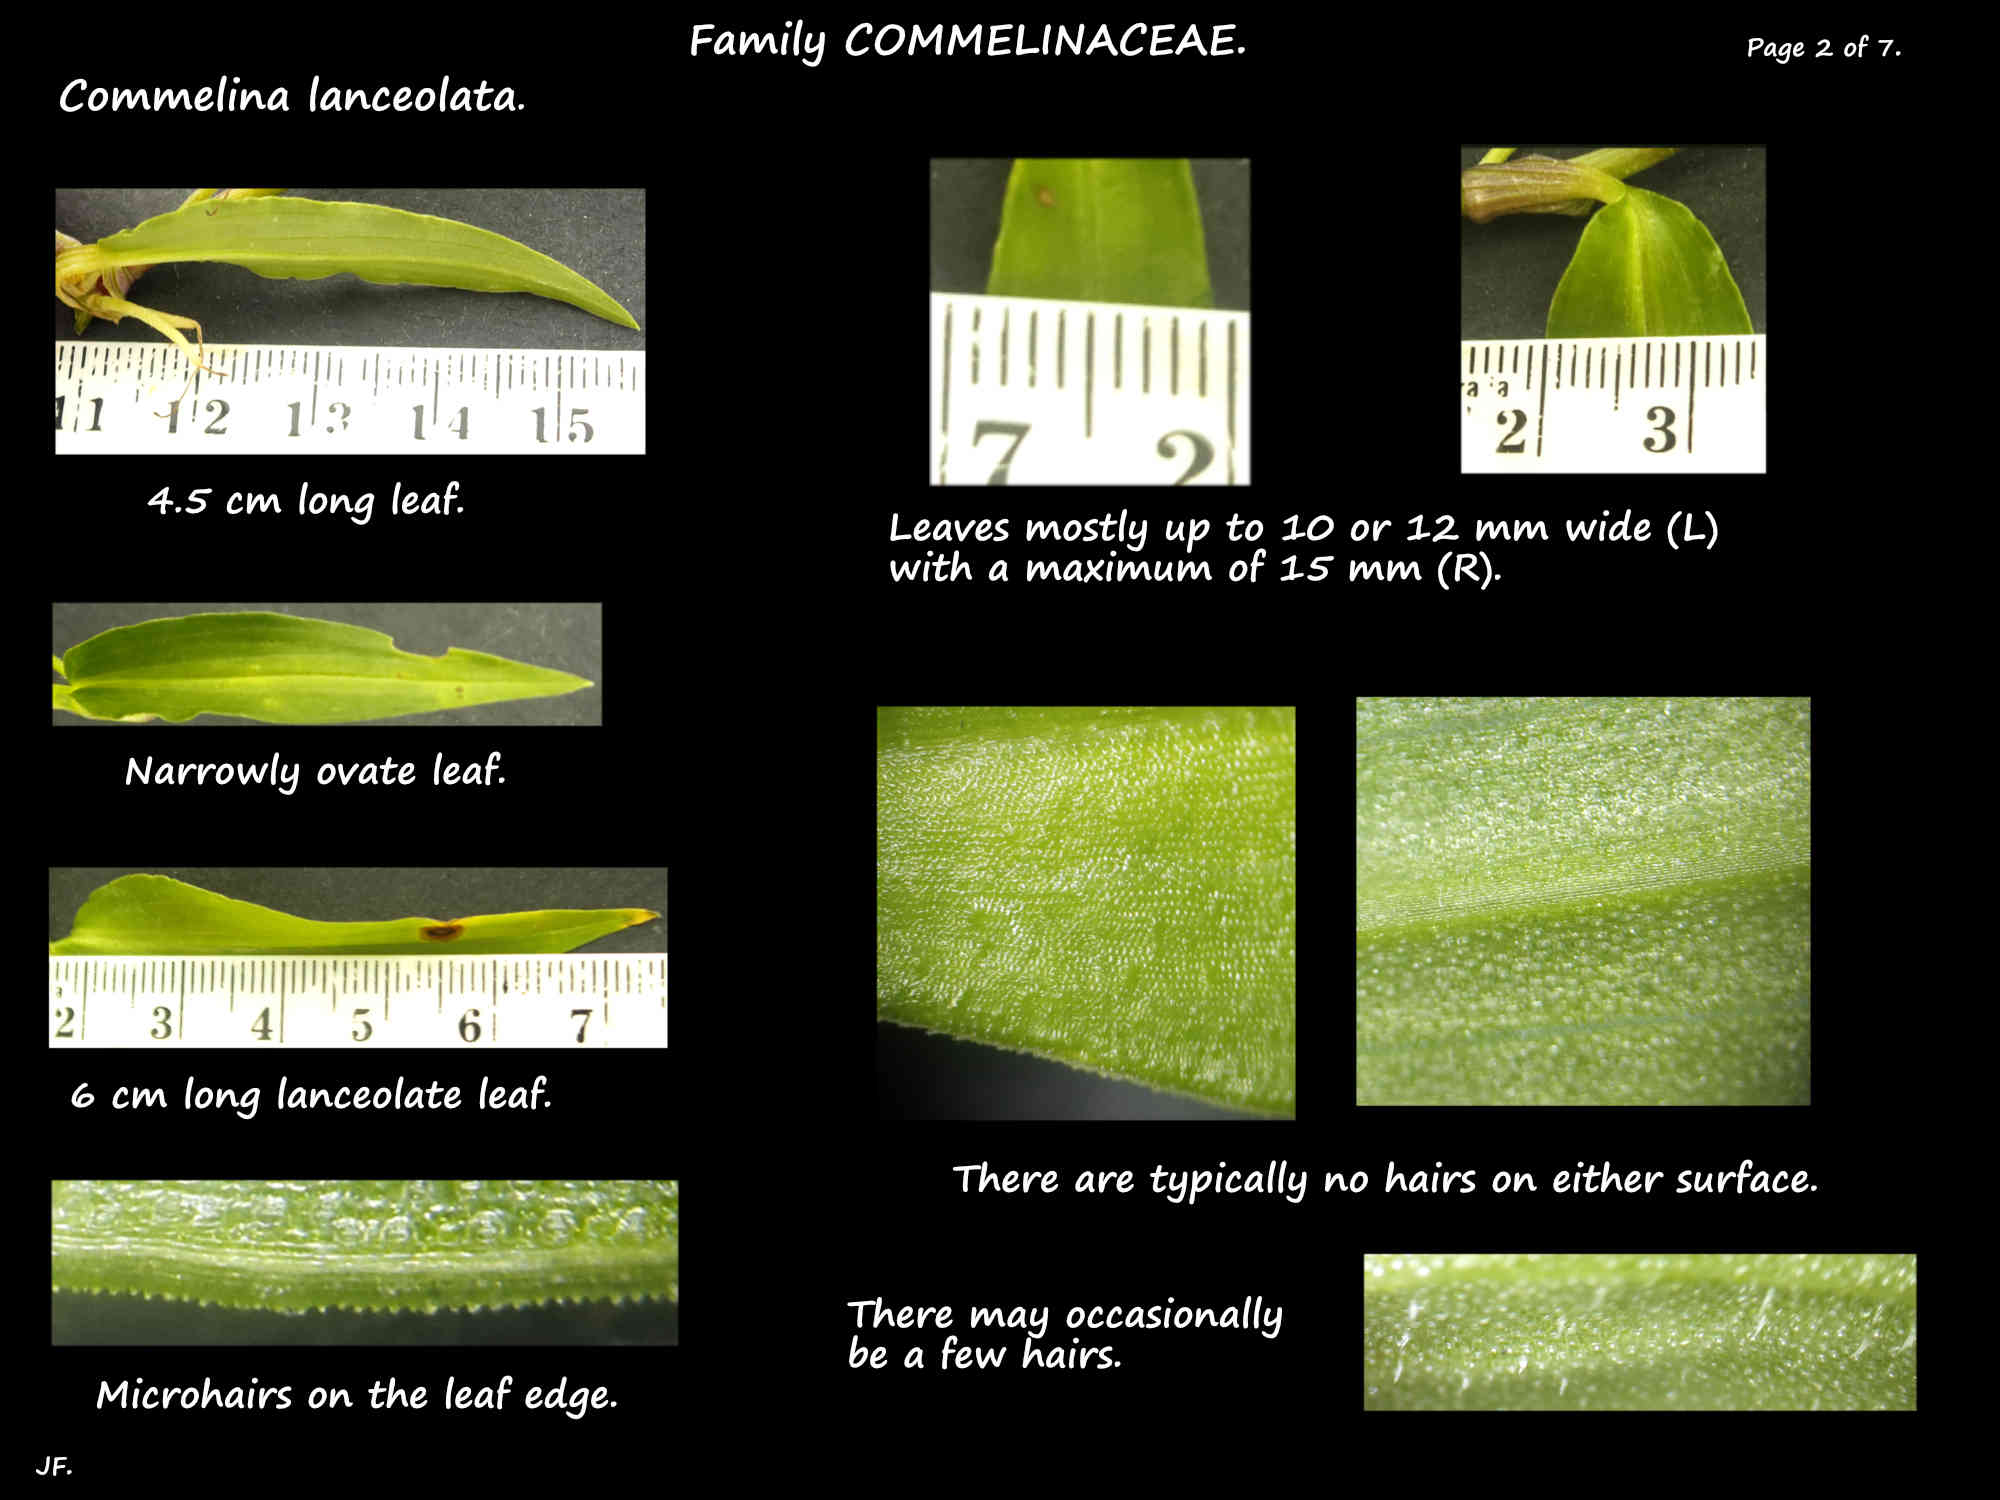 2 The narrow leaves of Commelina lanceolata